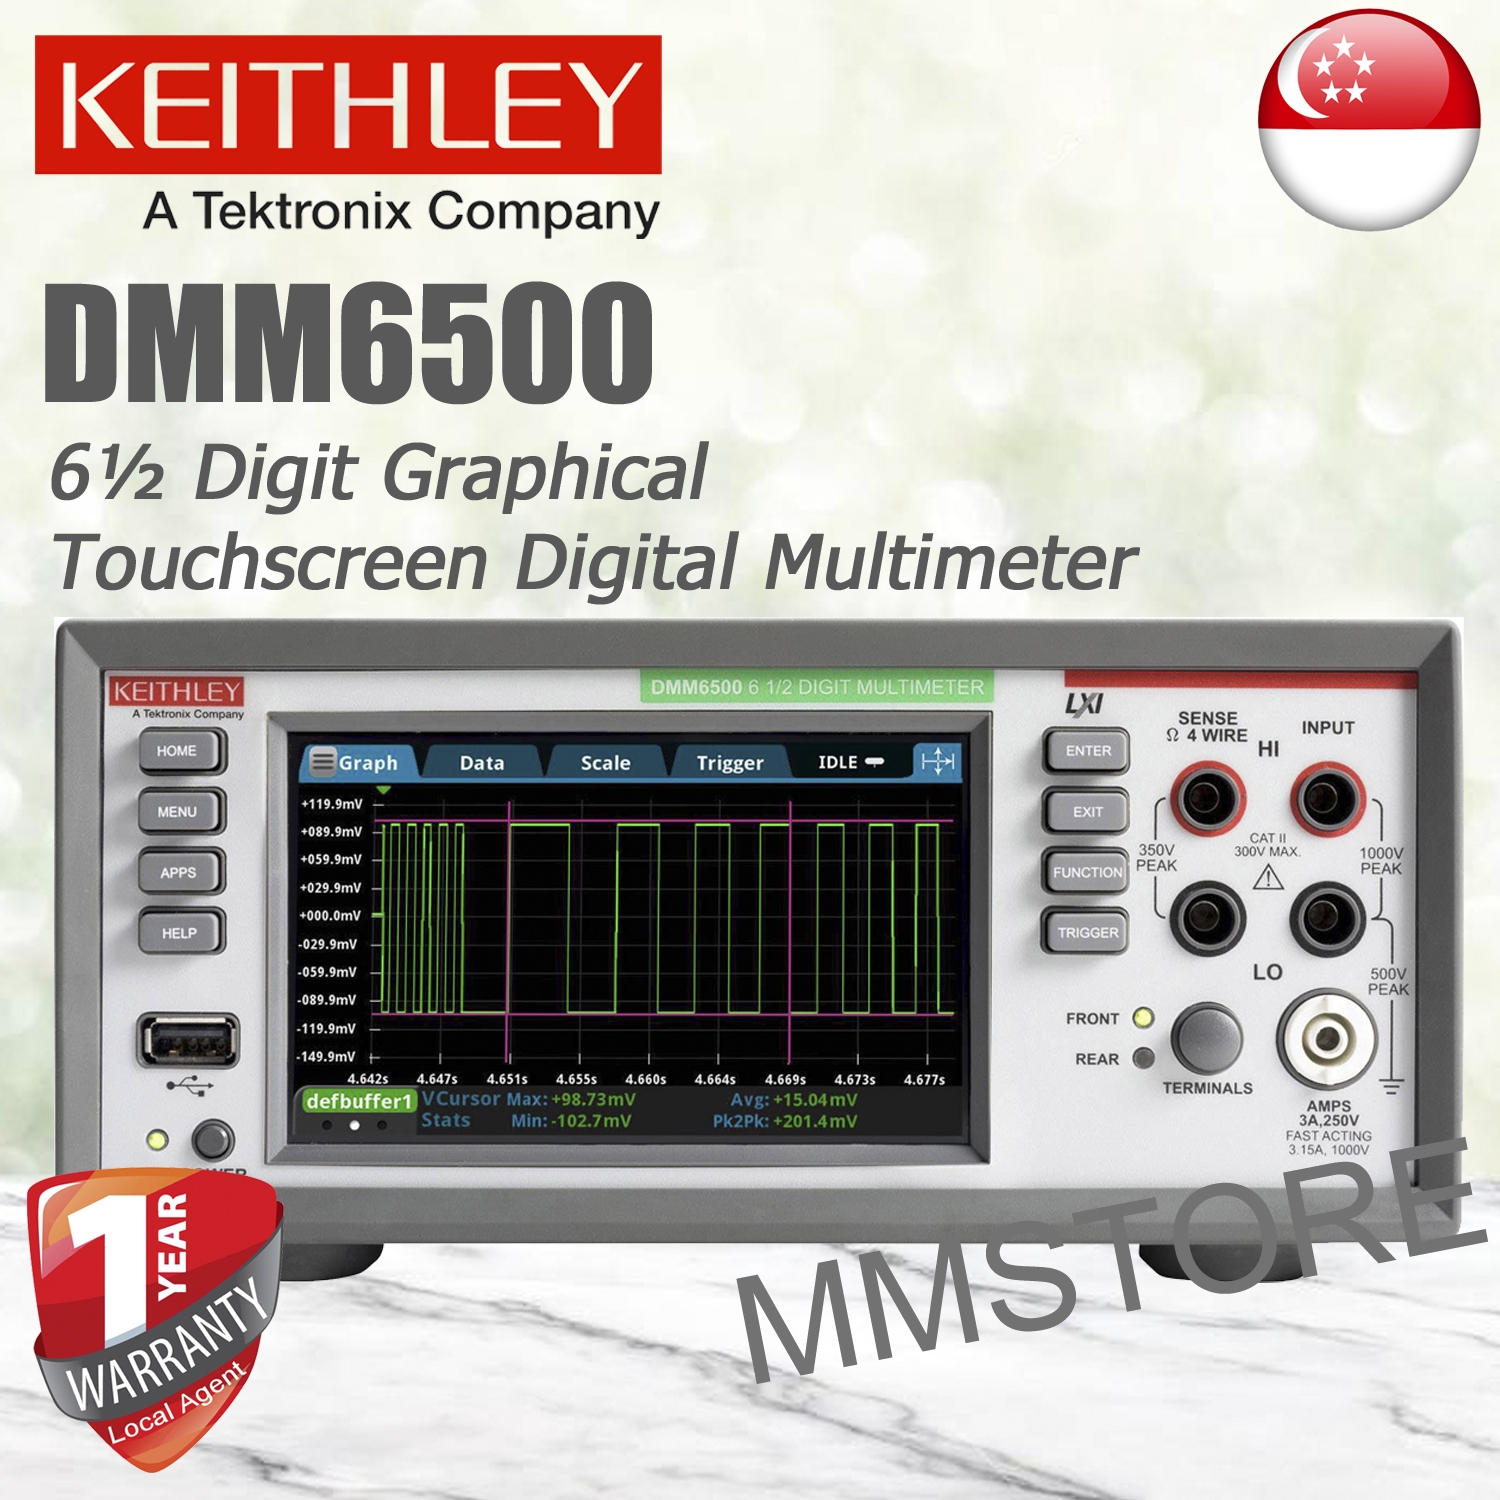 bred Ellers fysisk Keithley DMM6500 6½-Digit Graphical Touchscreen Digital Multimeter - MM  Store